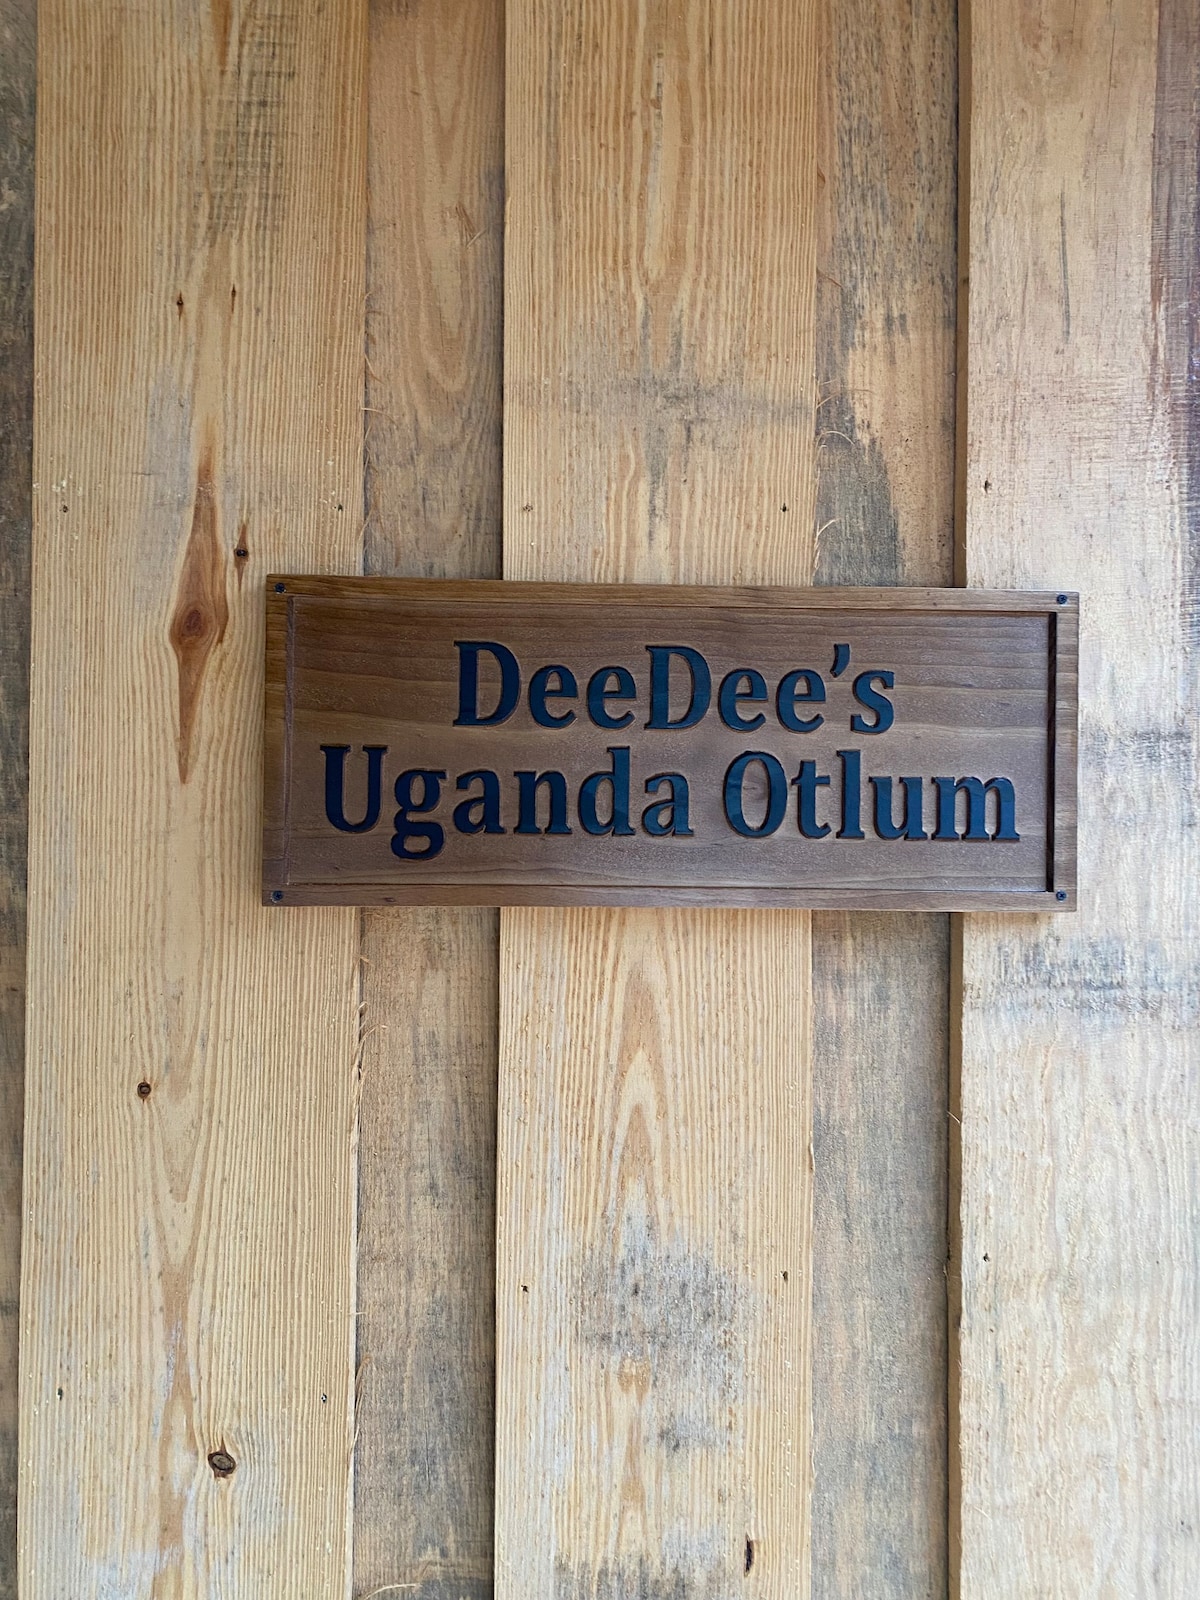 DeeDee 's Uganda Otlum